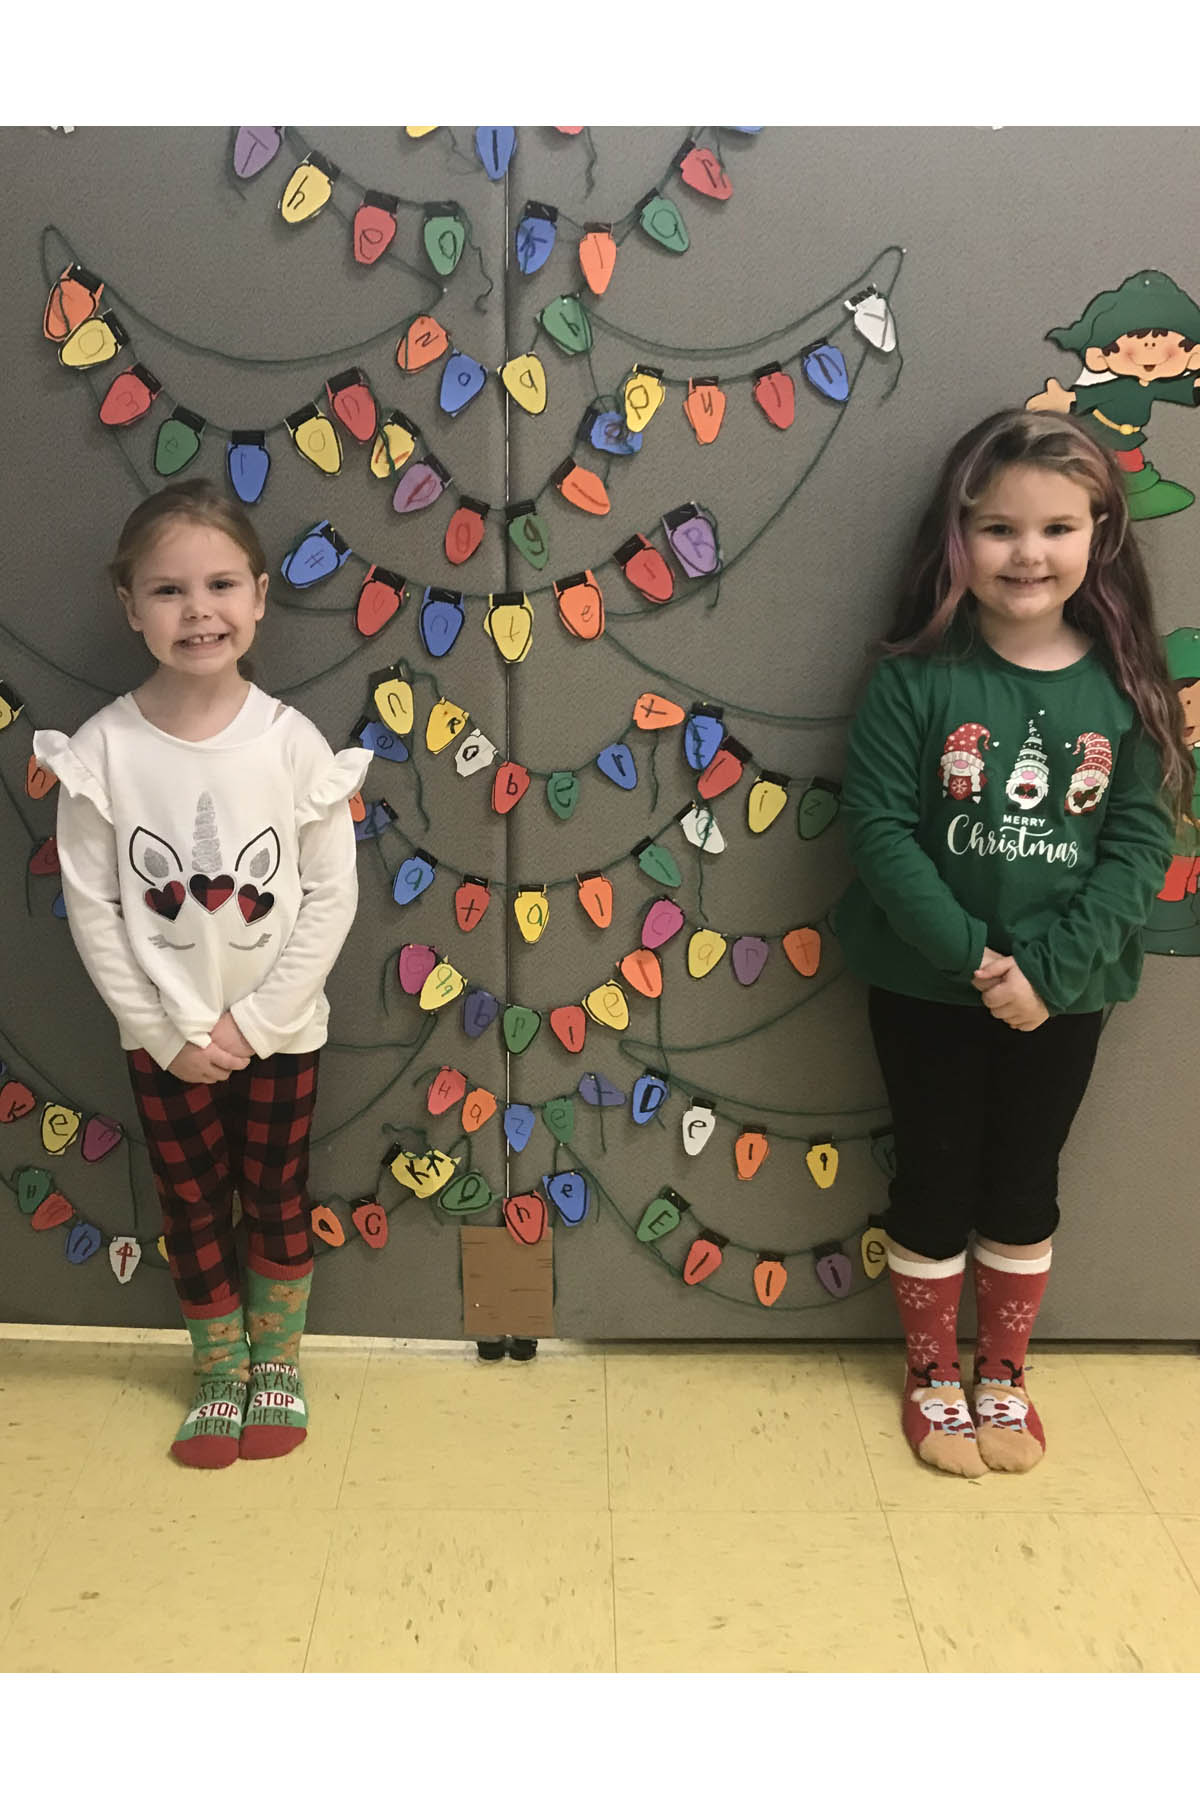 12 Days of Christmas at Memorial School